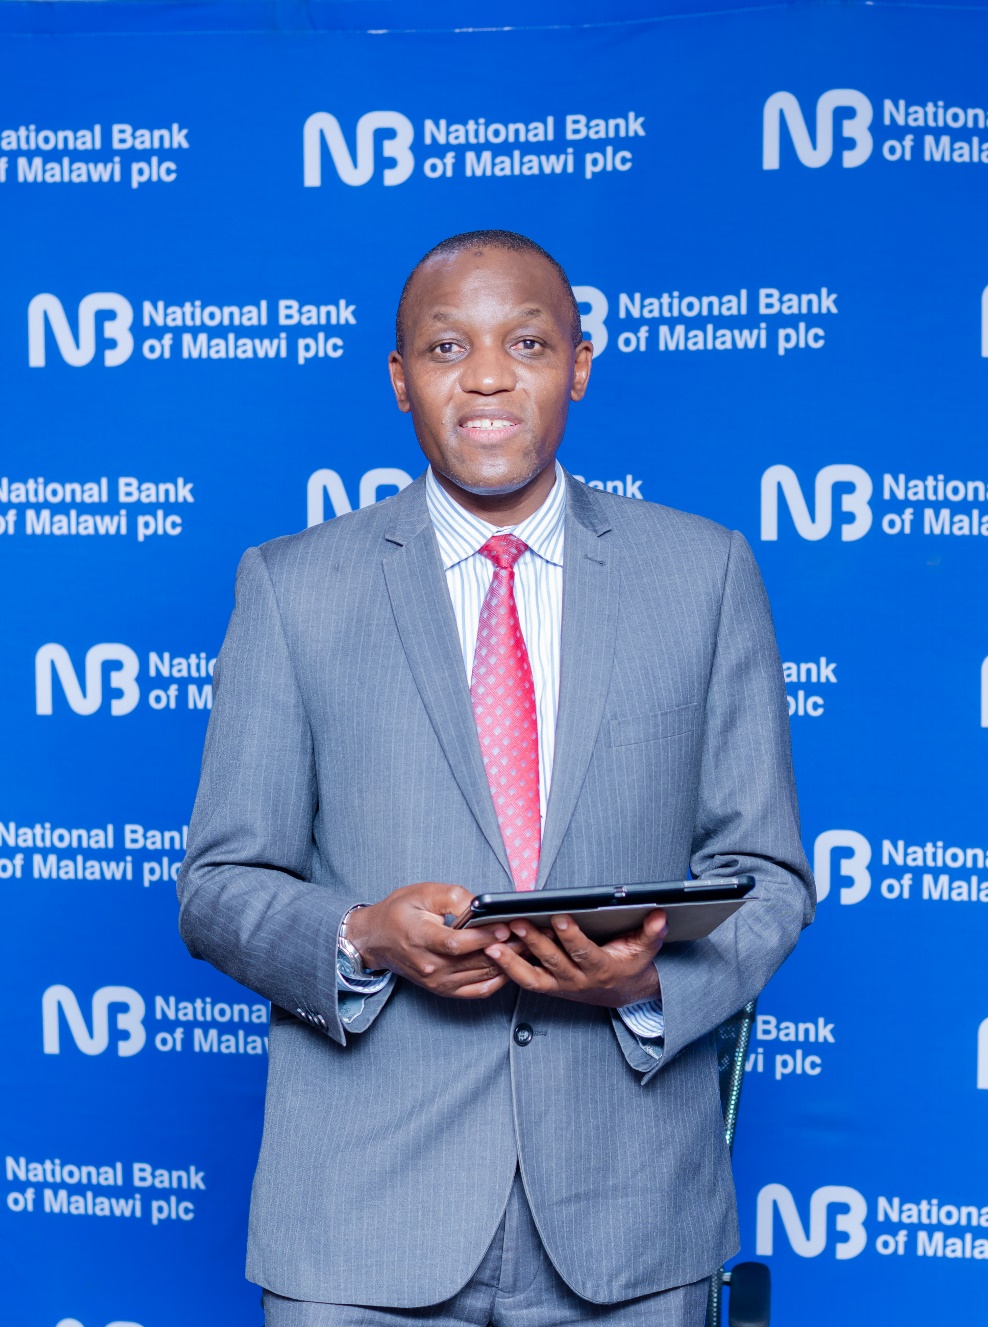 William Kaunda Head of Digital Finance Services